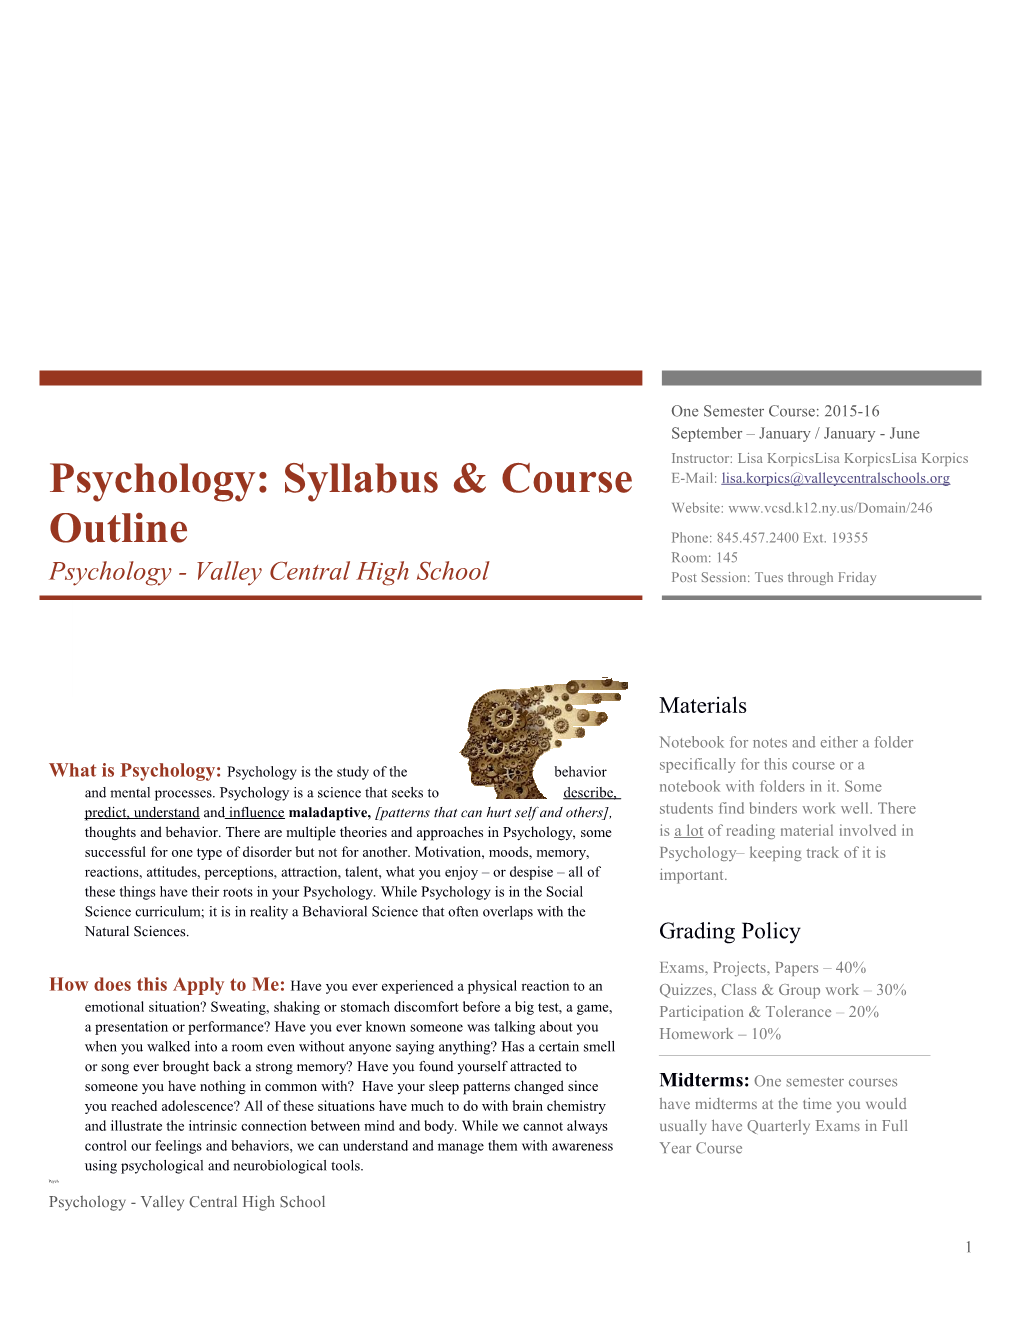 Psychology: Syllabus & Course Outline